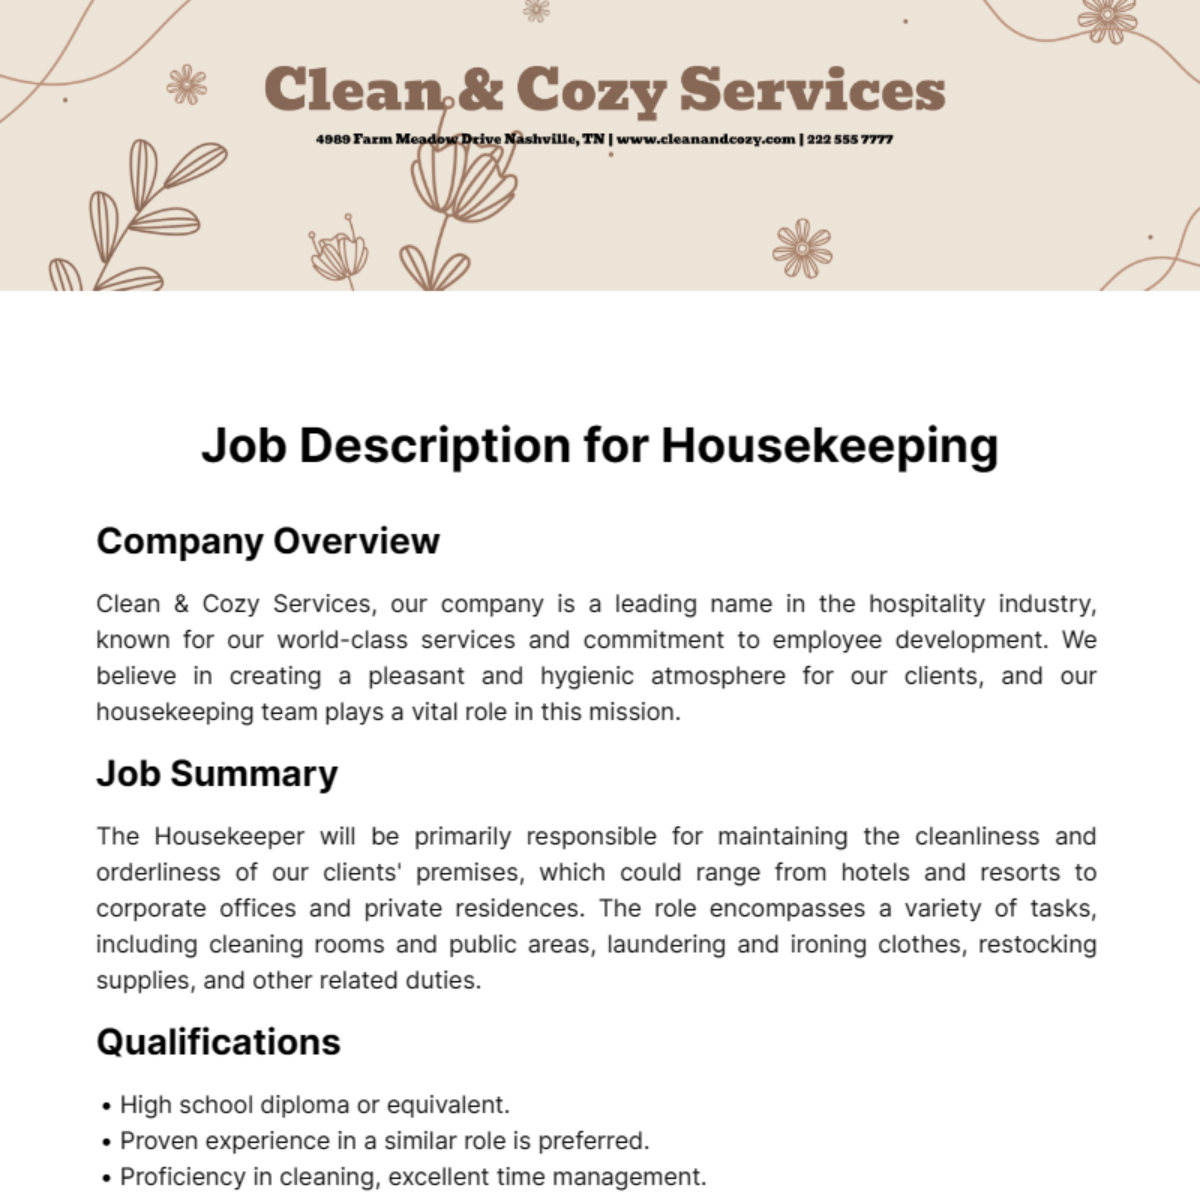 Job Description for Housekeeping Template